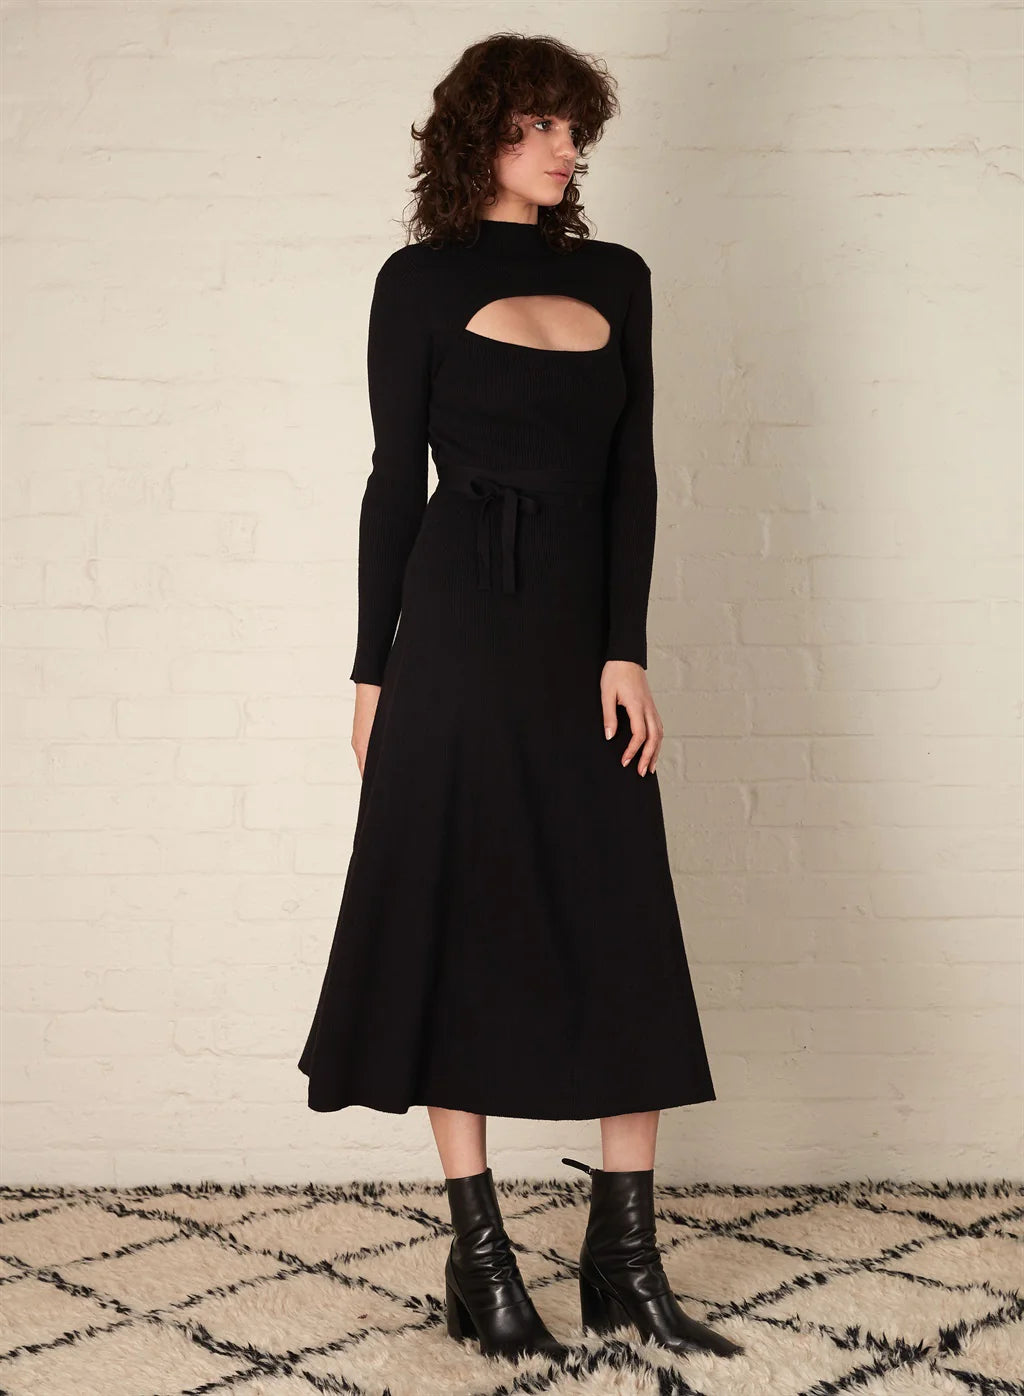 Esmaee Cara Knit Dress - Black